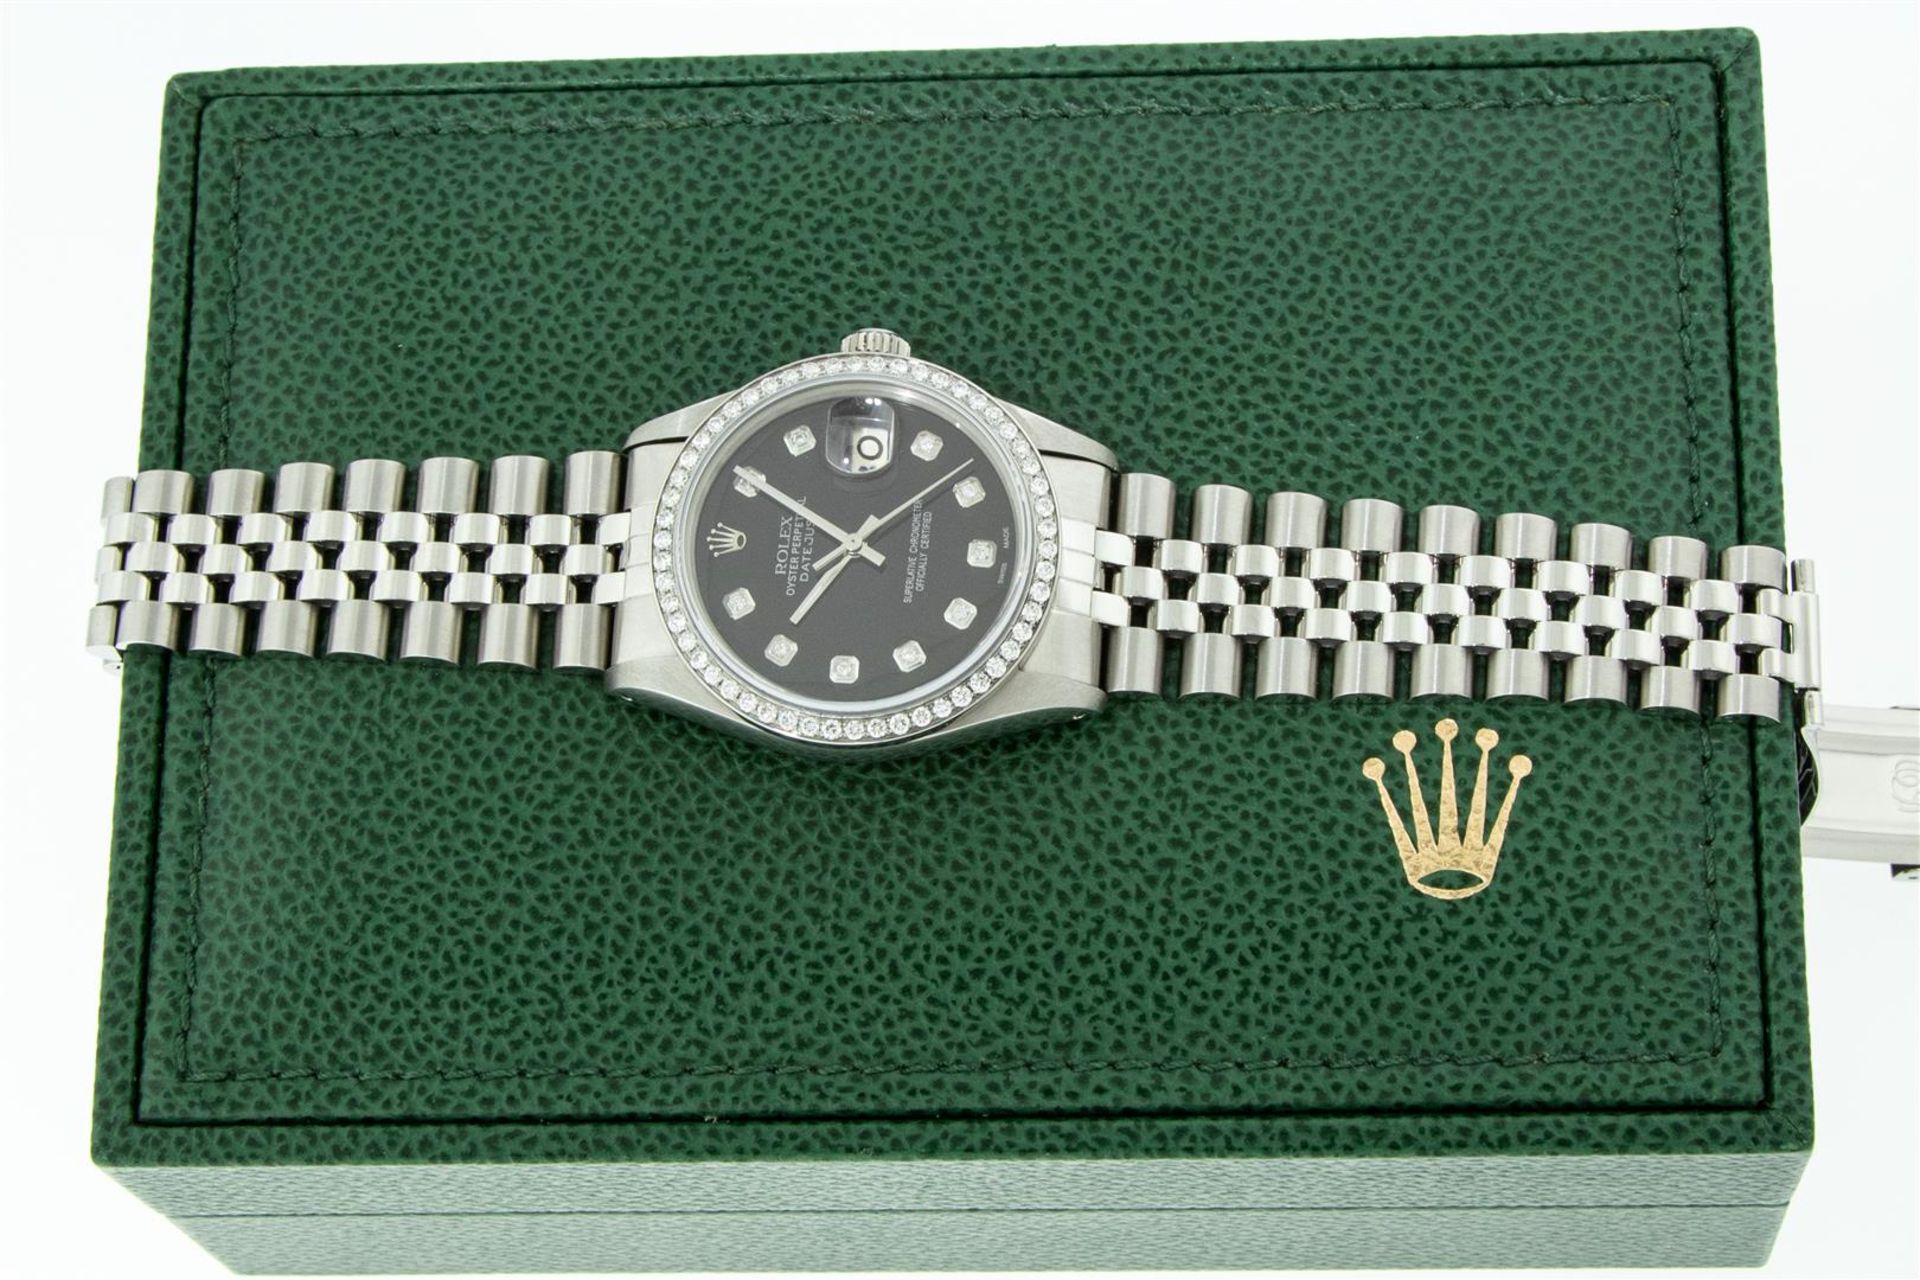 Rolex Mens Stainless Steel Black Diamond 36MM Datejust Wristwatch - Image 4 of 9